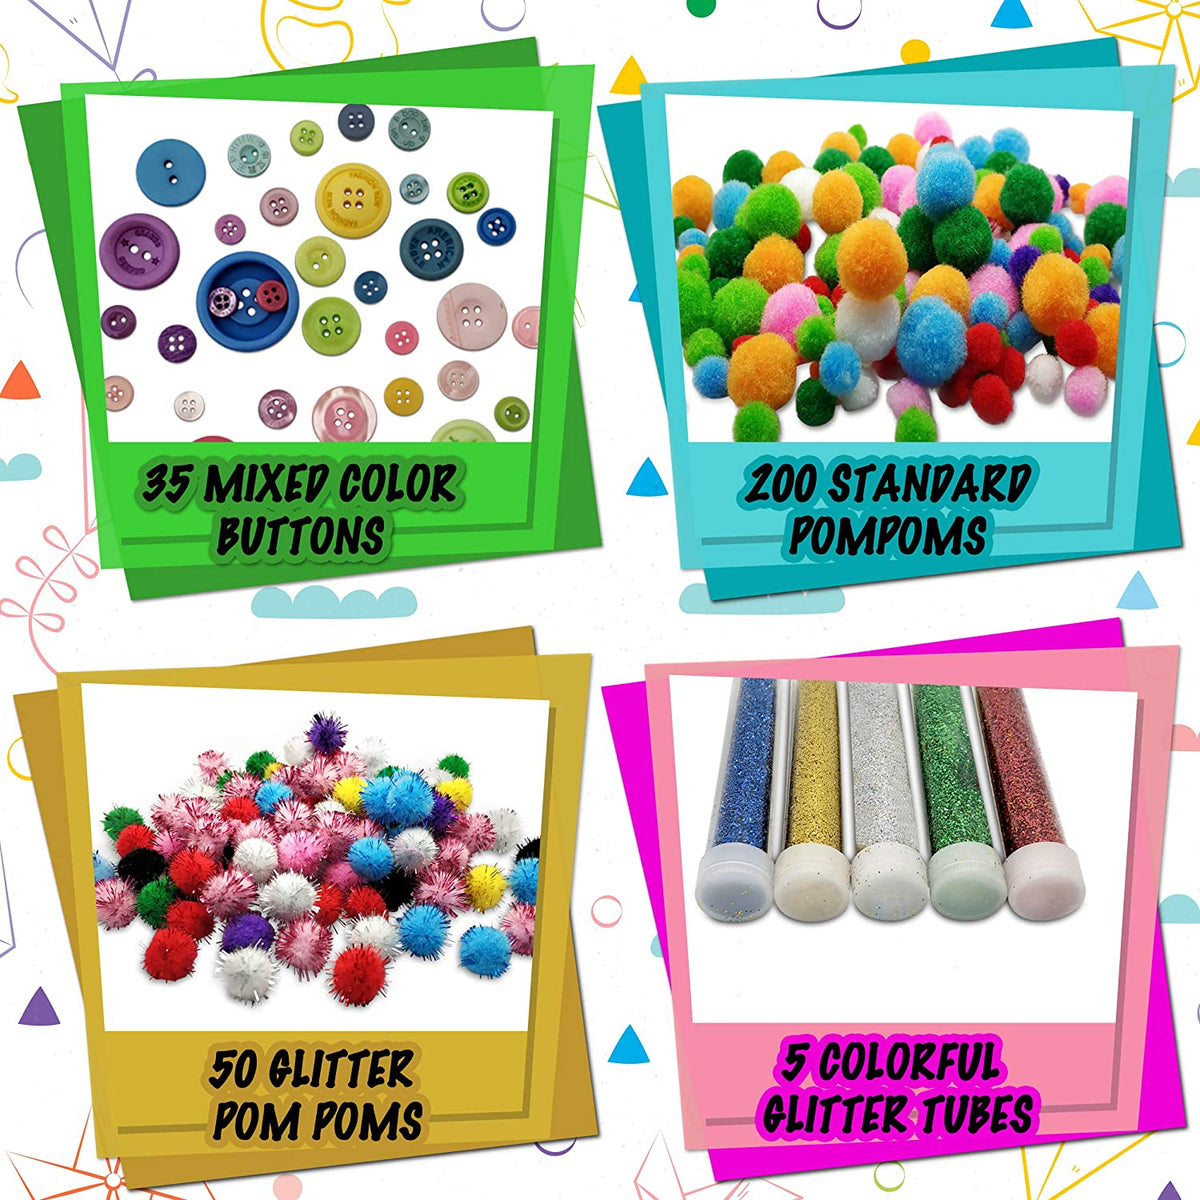 Epiqueone 2100pc Art & Craft Supply Kit - Large/Giant Pom Poms & Small/Mini Pom